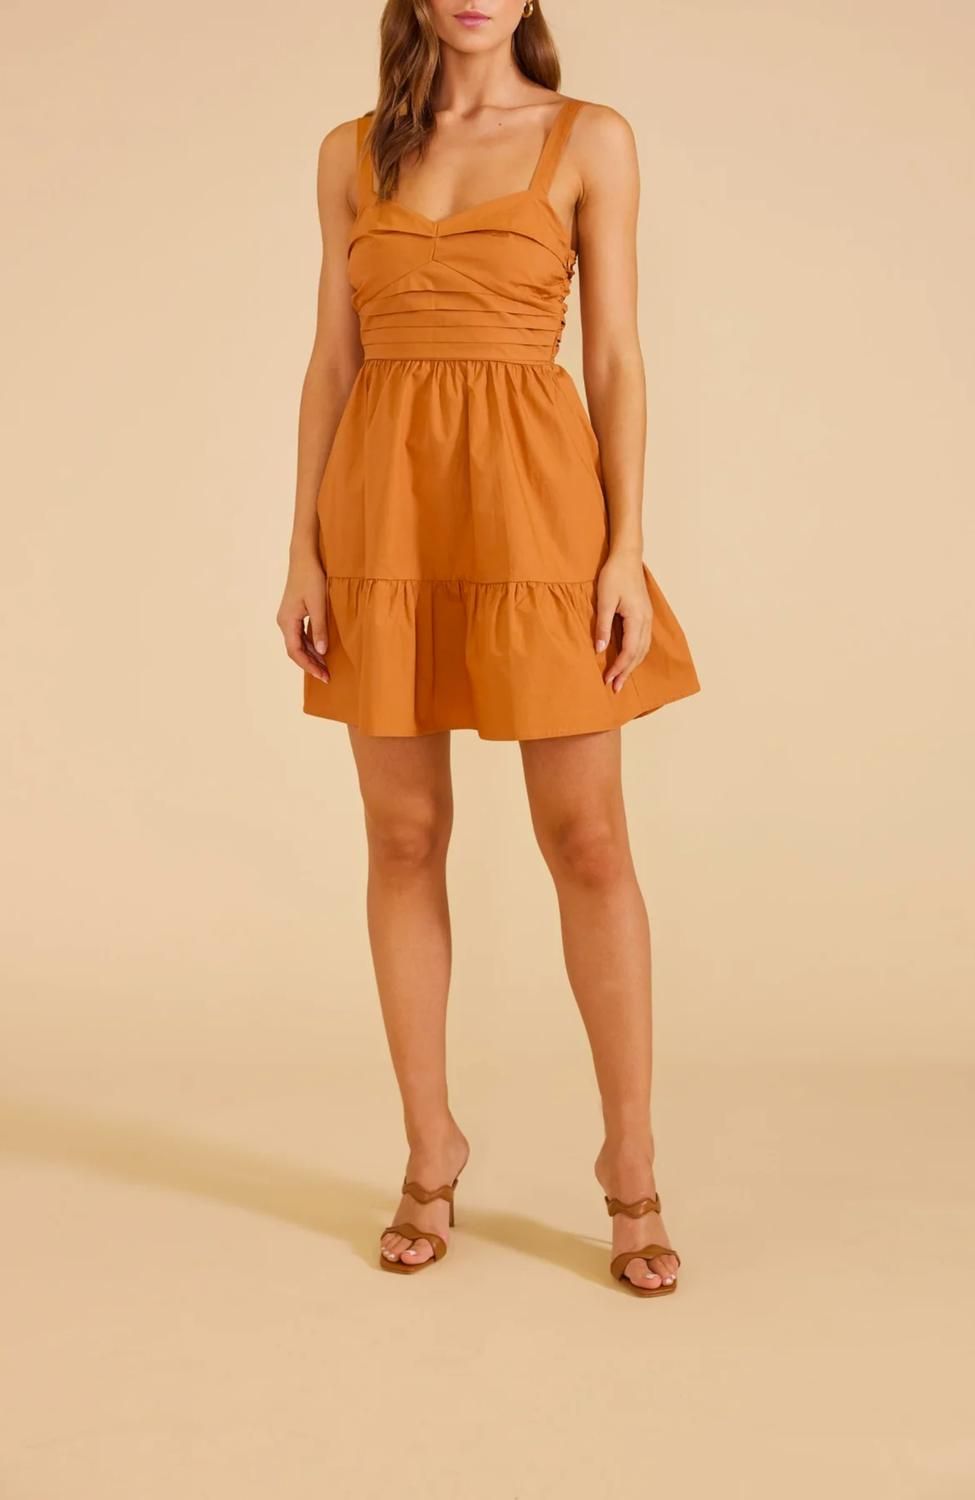 Style 1-99187641-2901 MINKPINK Size M Orange Cocktail Dress on Queenly